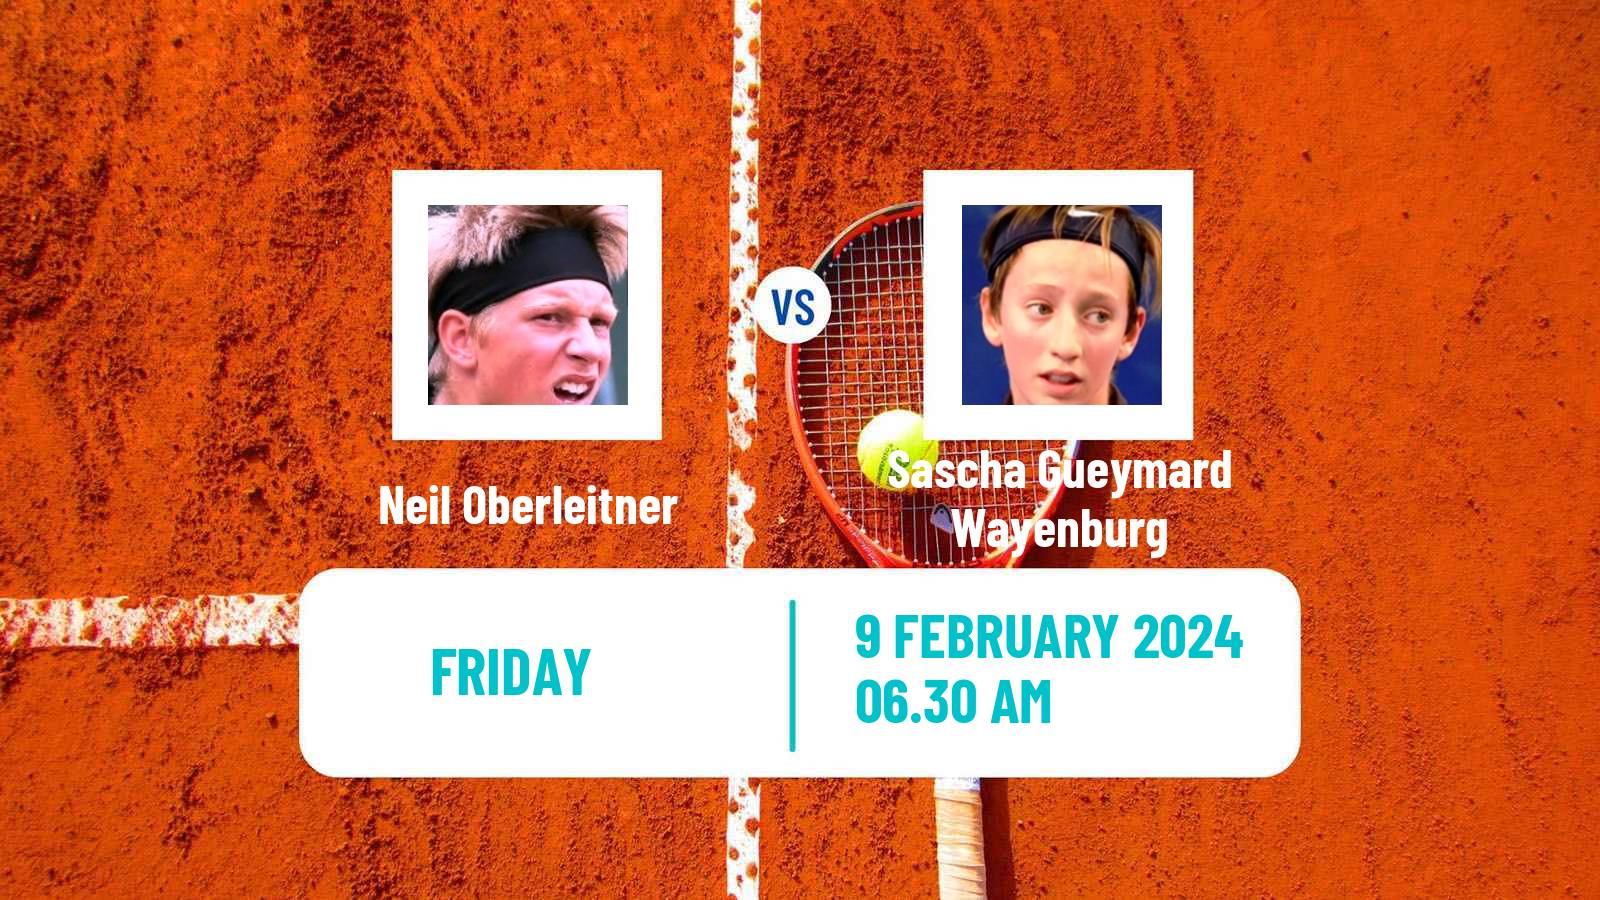 Tennis ITF M15 Grenoble Men Neil Oberleitner - Sascha Gueymard Wayenburg